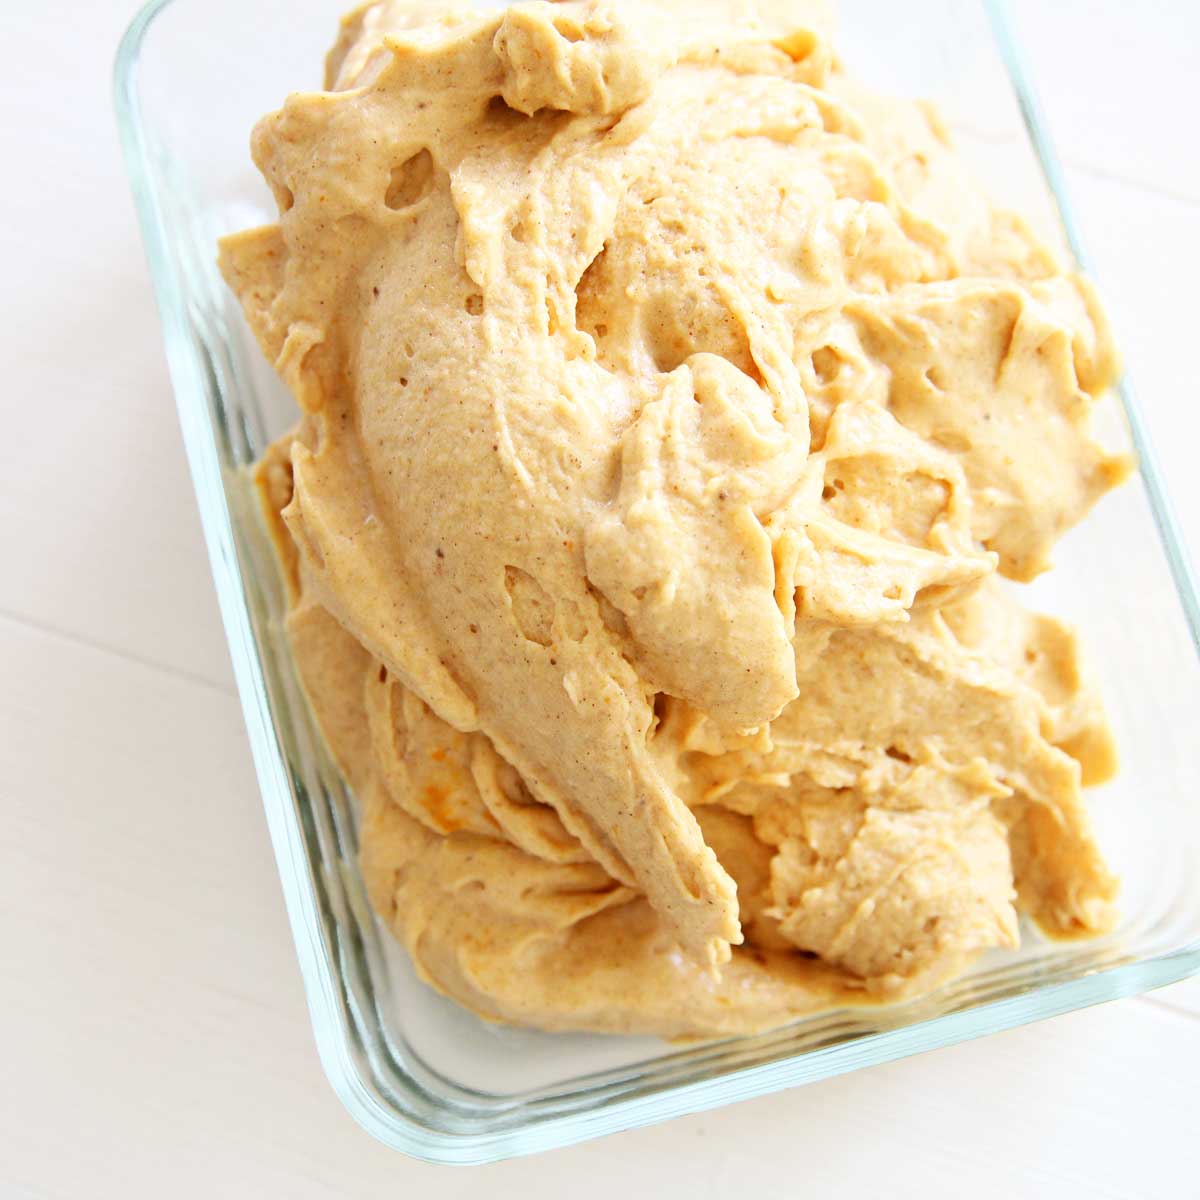 Easy Vegan Pumpkin Pie Spice Nice Cream Recipe (Only 4 Ingredients!) - Pumpkin Pie Spice Nice Cream